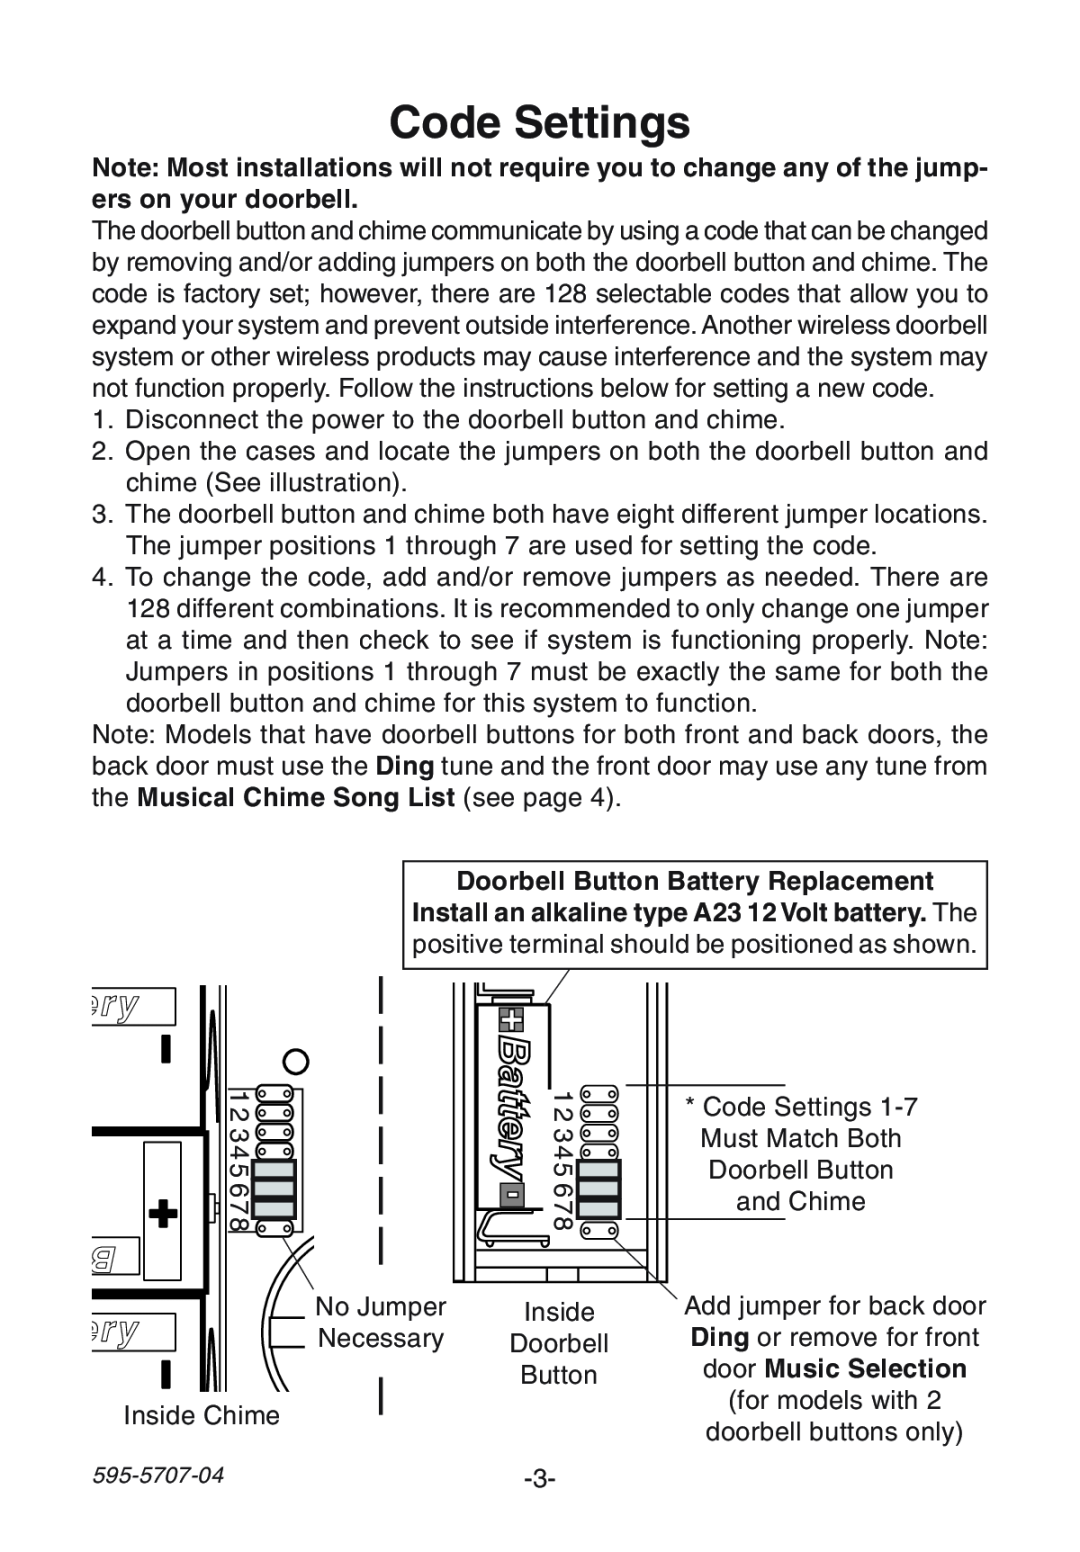 Heath Zenith SL-6164 manual Code Settings, Doorbell Button Battery Replacement 